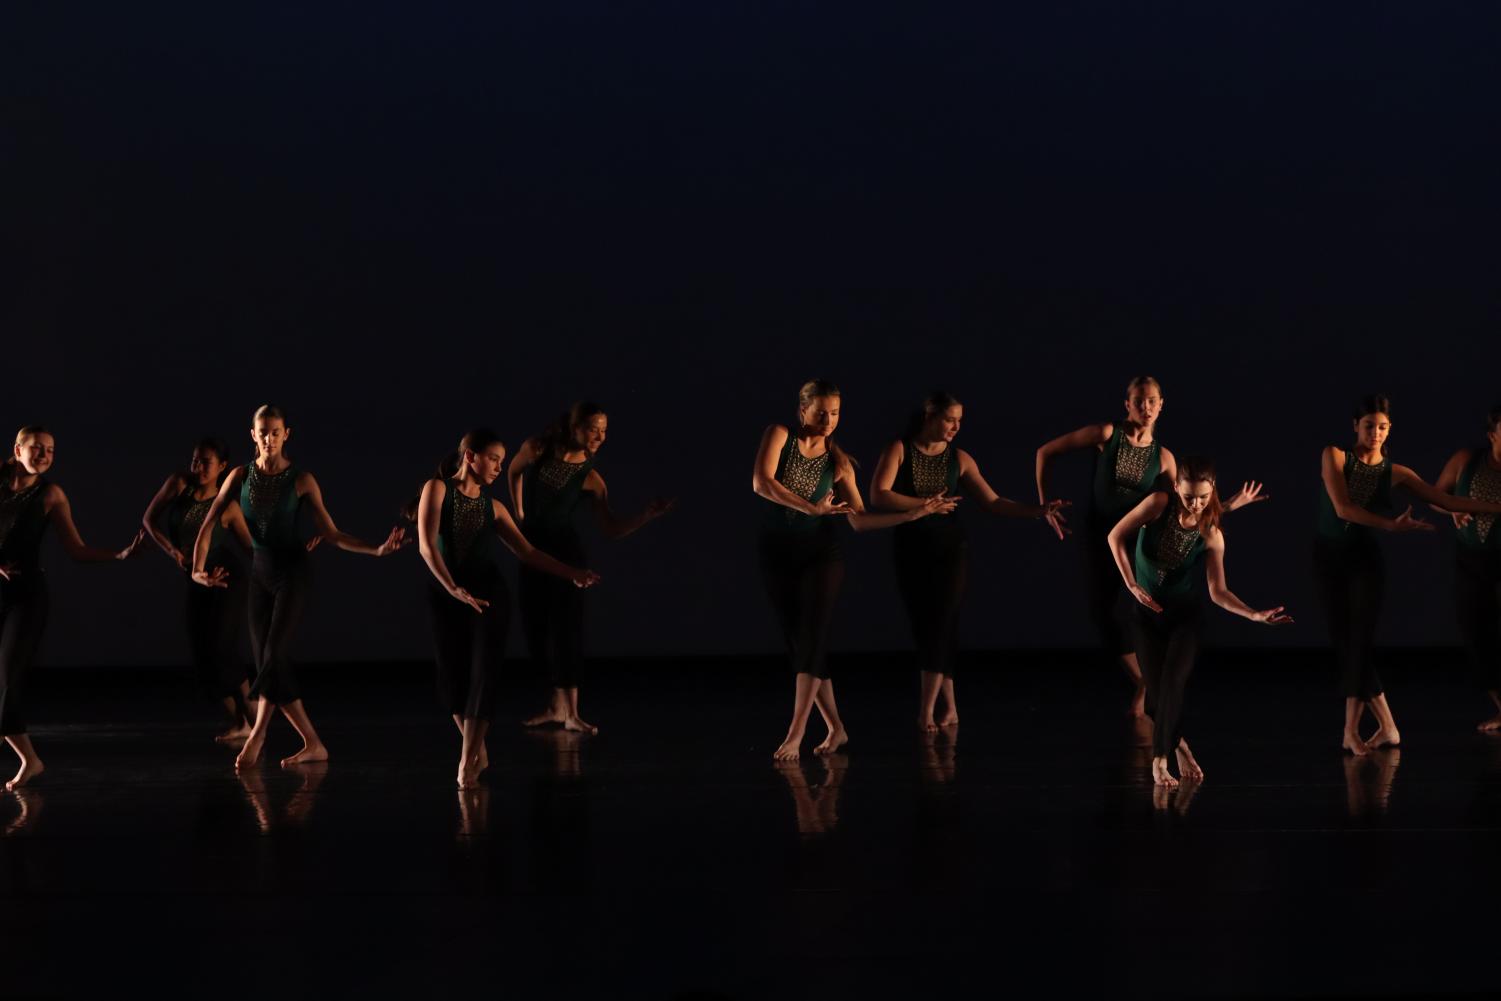 Giordano+Dance+Project%3A+Photostory